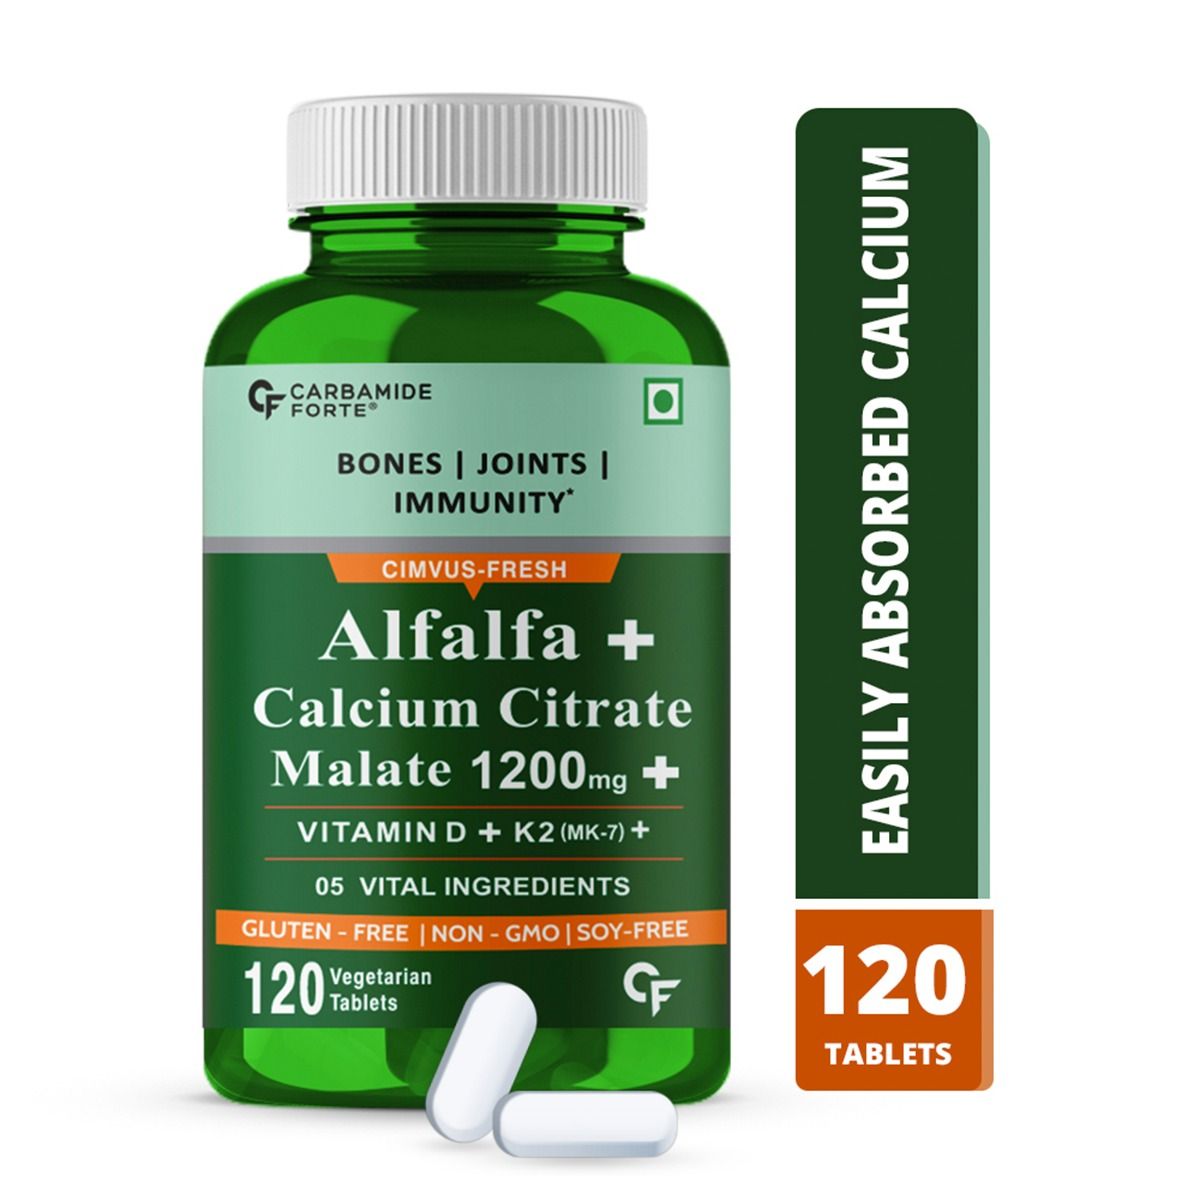 Buy Carbamide Forte Alfalfa + Calcium Citaate Malate 1200mg + Vegetarian Tablets, 120 Count Online